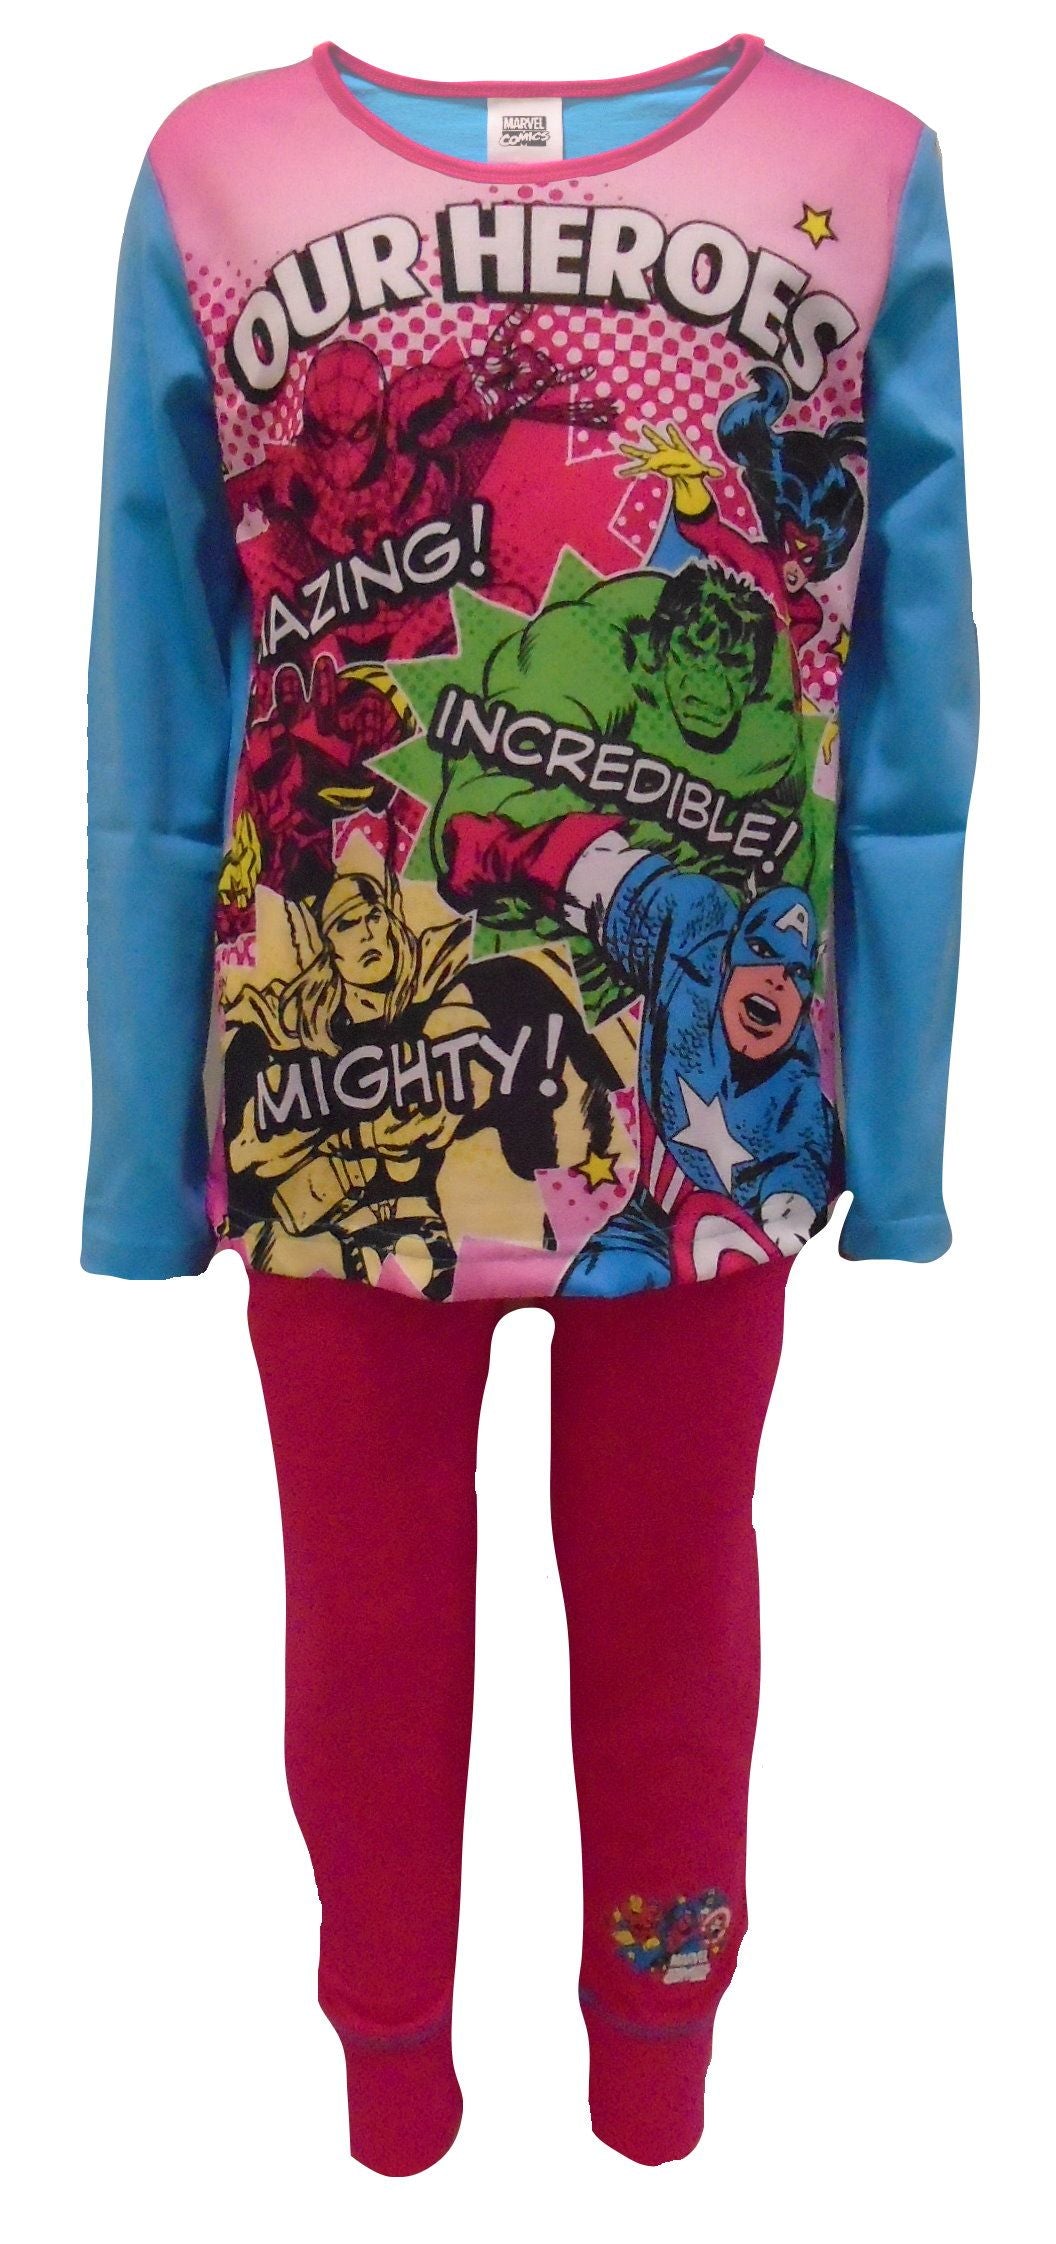 Marvel Comics "Our Heroes" Girl's 2 Piece Pyjama Set